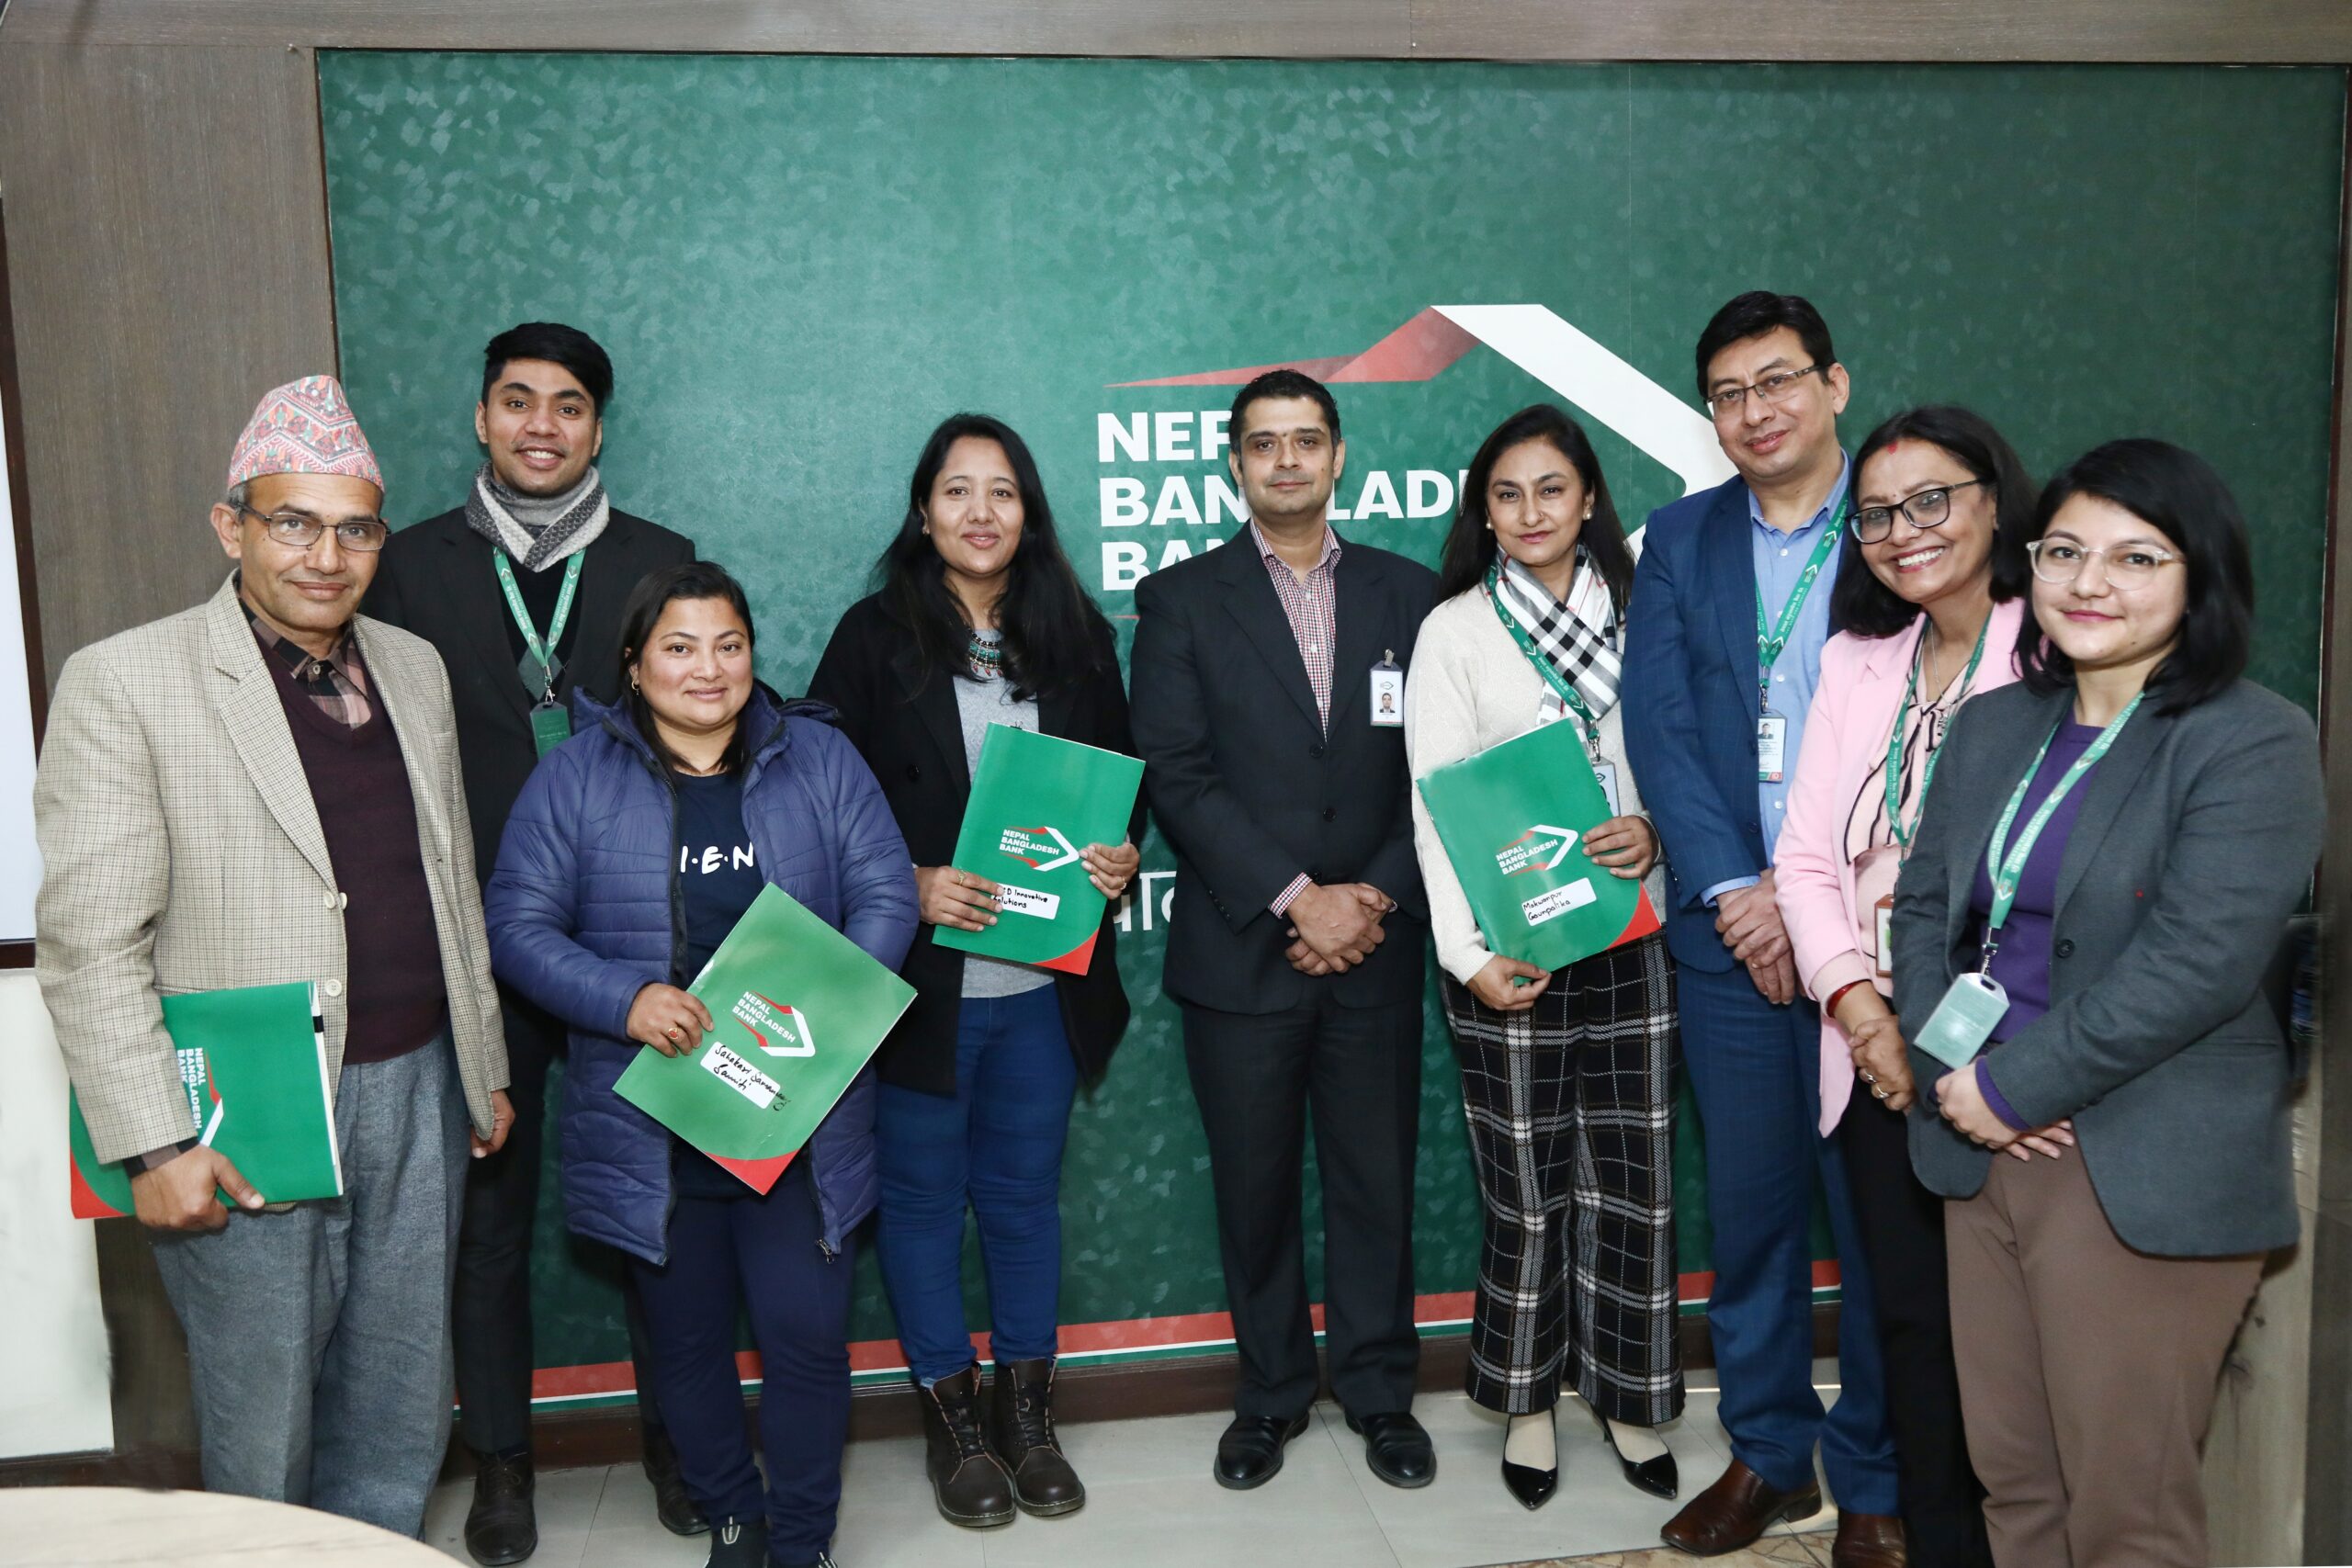 Nepal Bangladesh Bank launches Kisan Krishi Loan Card Scheme